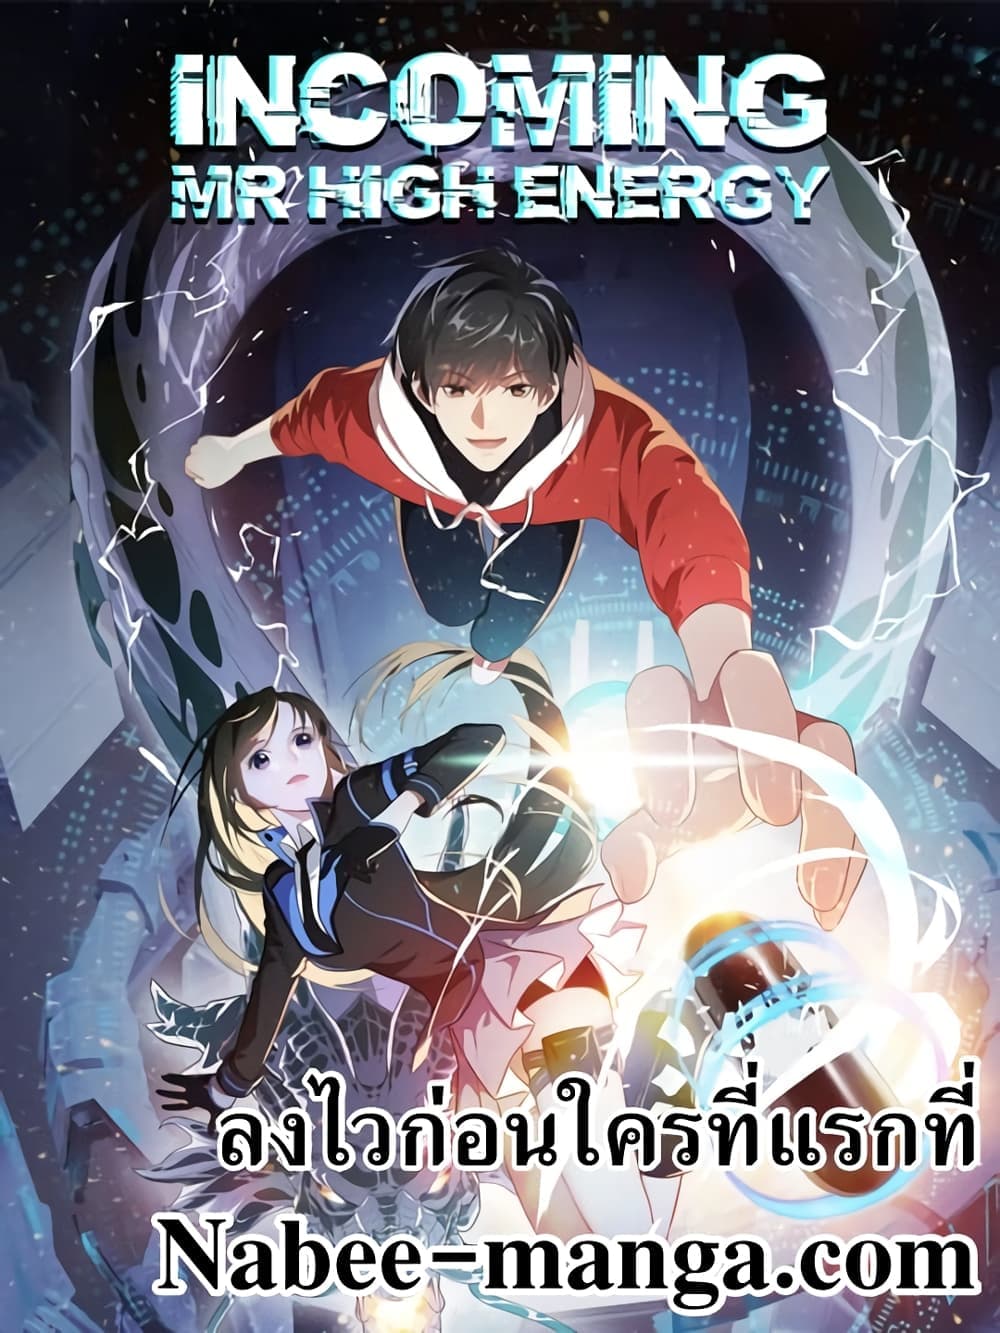 High Energy Strikes à¸à¸­à¸à¸à¸µà¹ 240 (1)